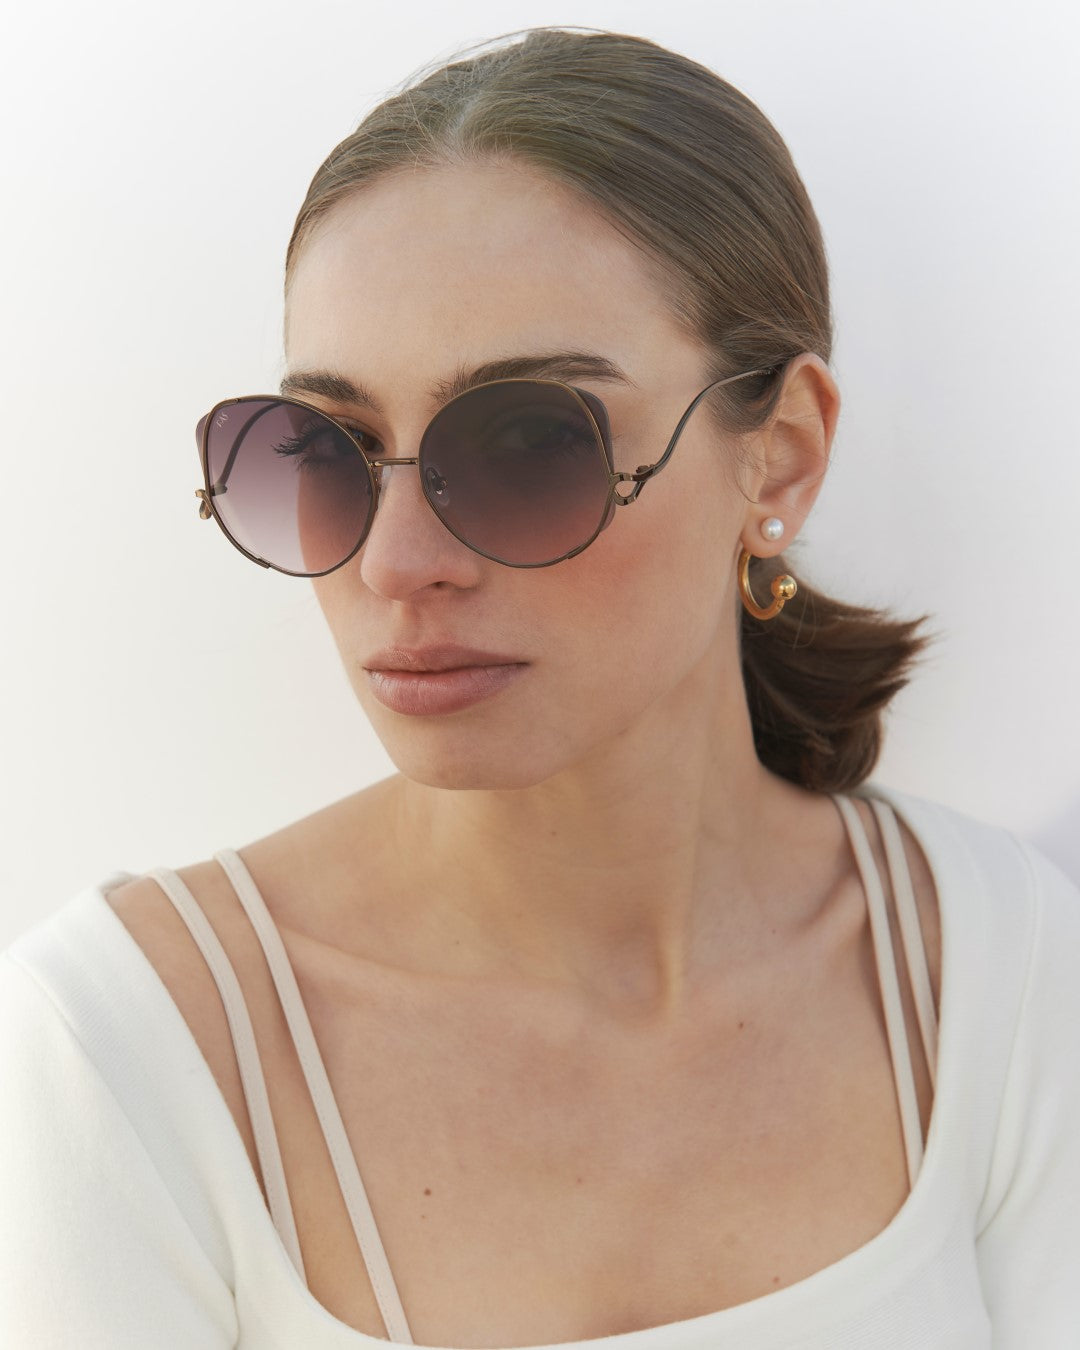 Canvas Sunglasses, Rose on a Model. 